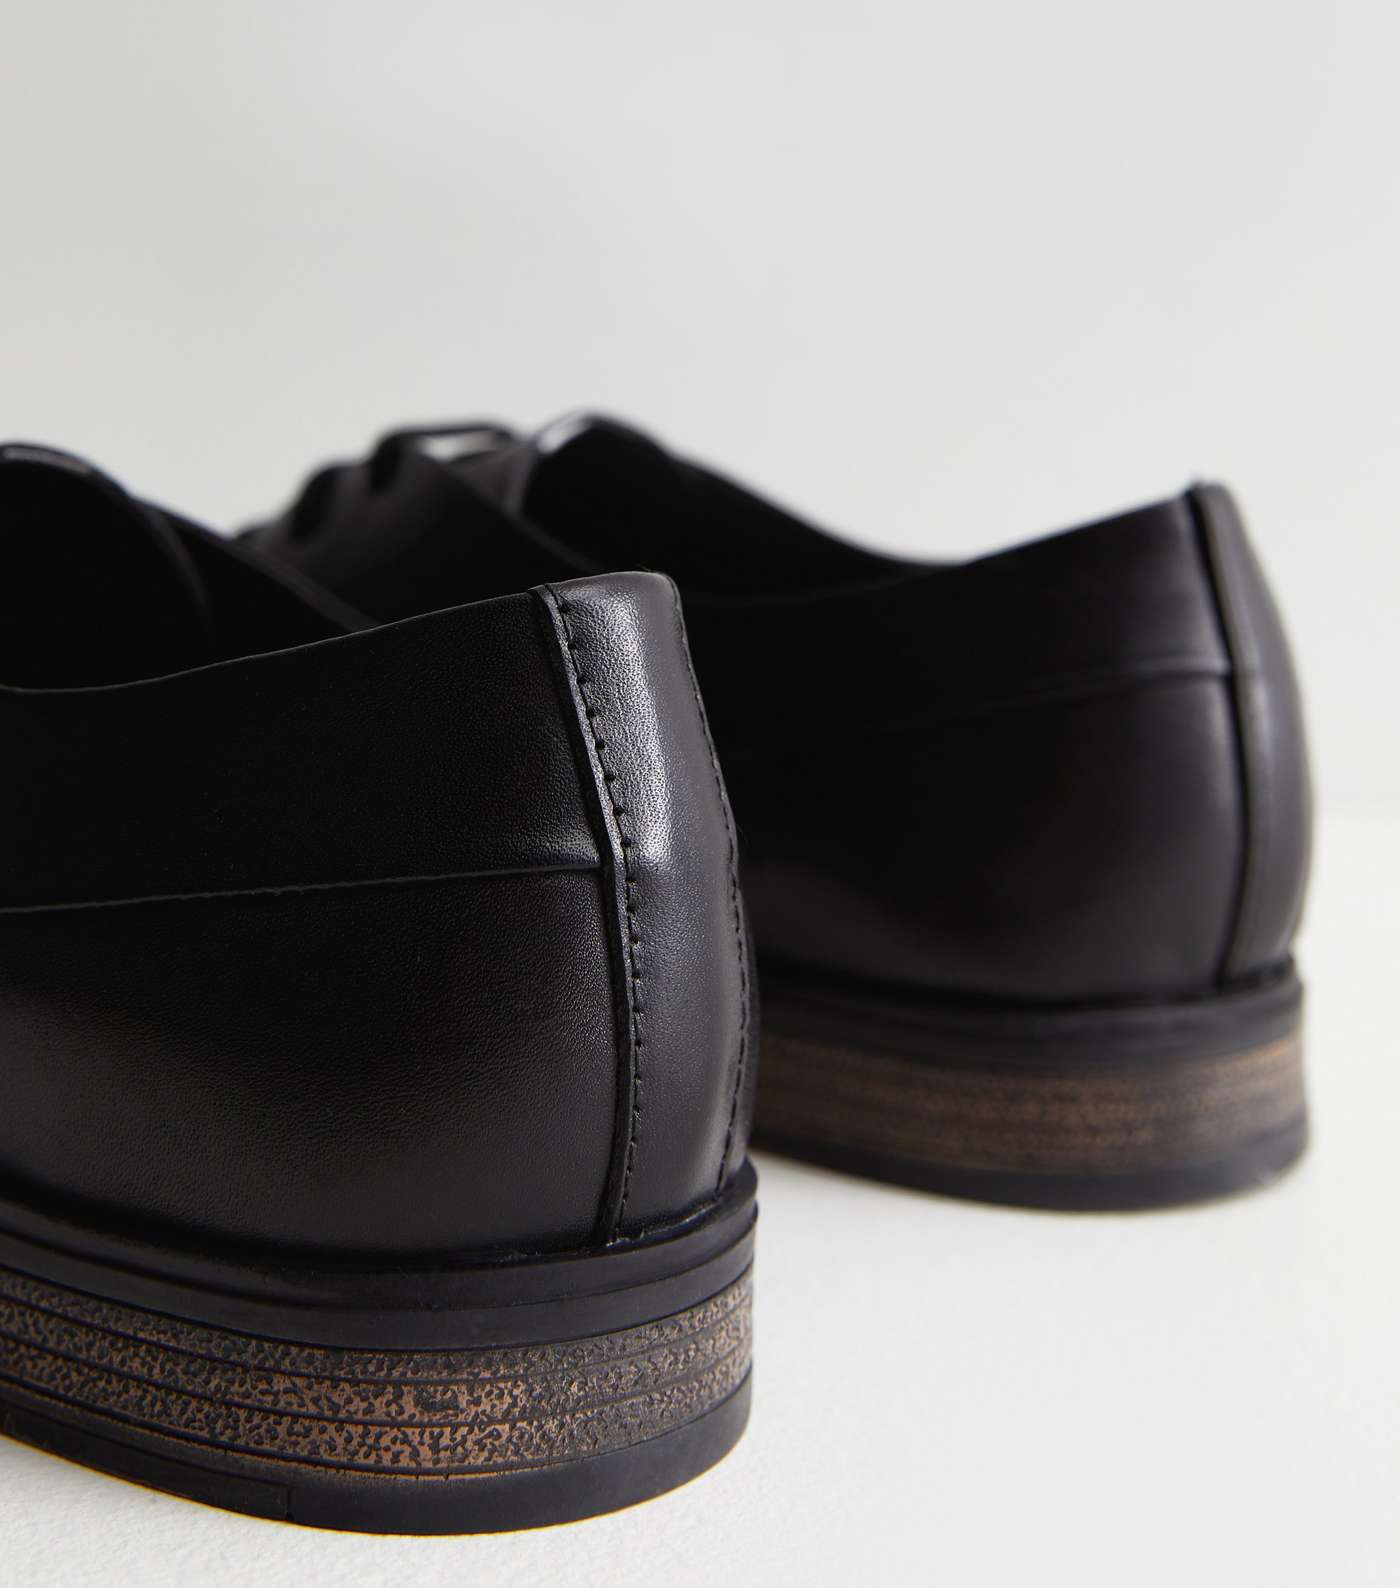 Jack & Jones Dark Grey Leather Rounded Oxford Shoes Image 4